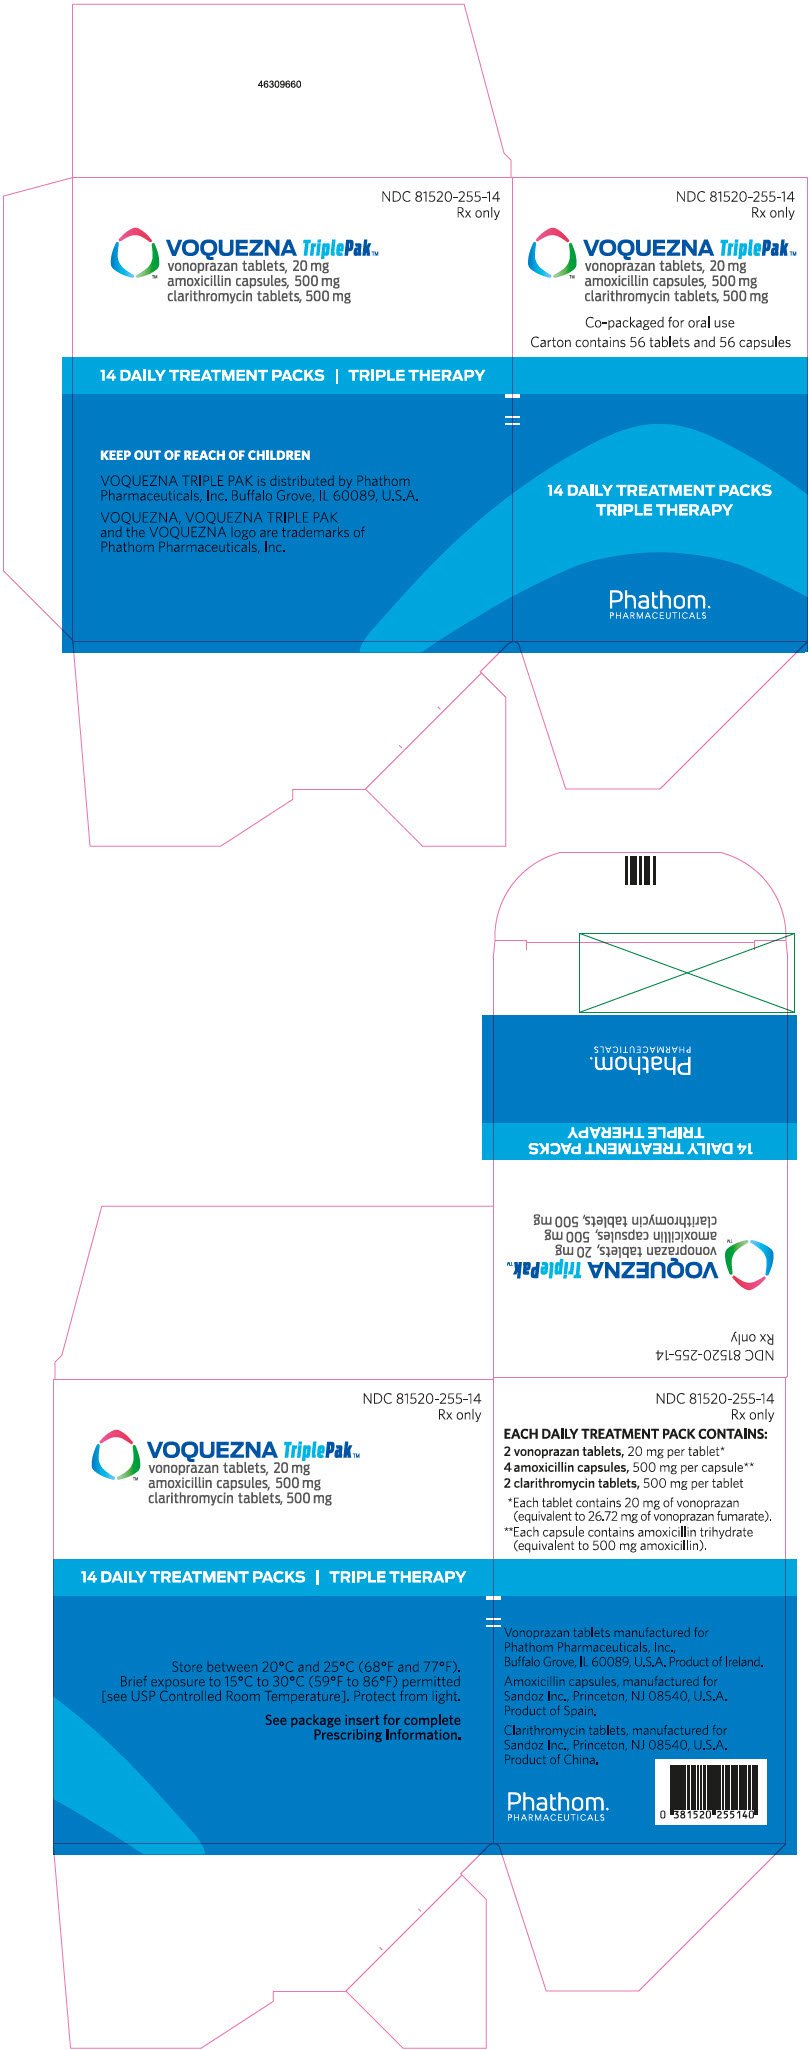 PRINCIPAL DISPLAY PANEL - Kit Carton - NDC 81520-255